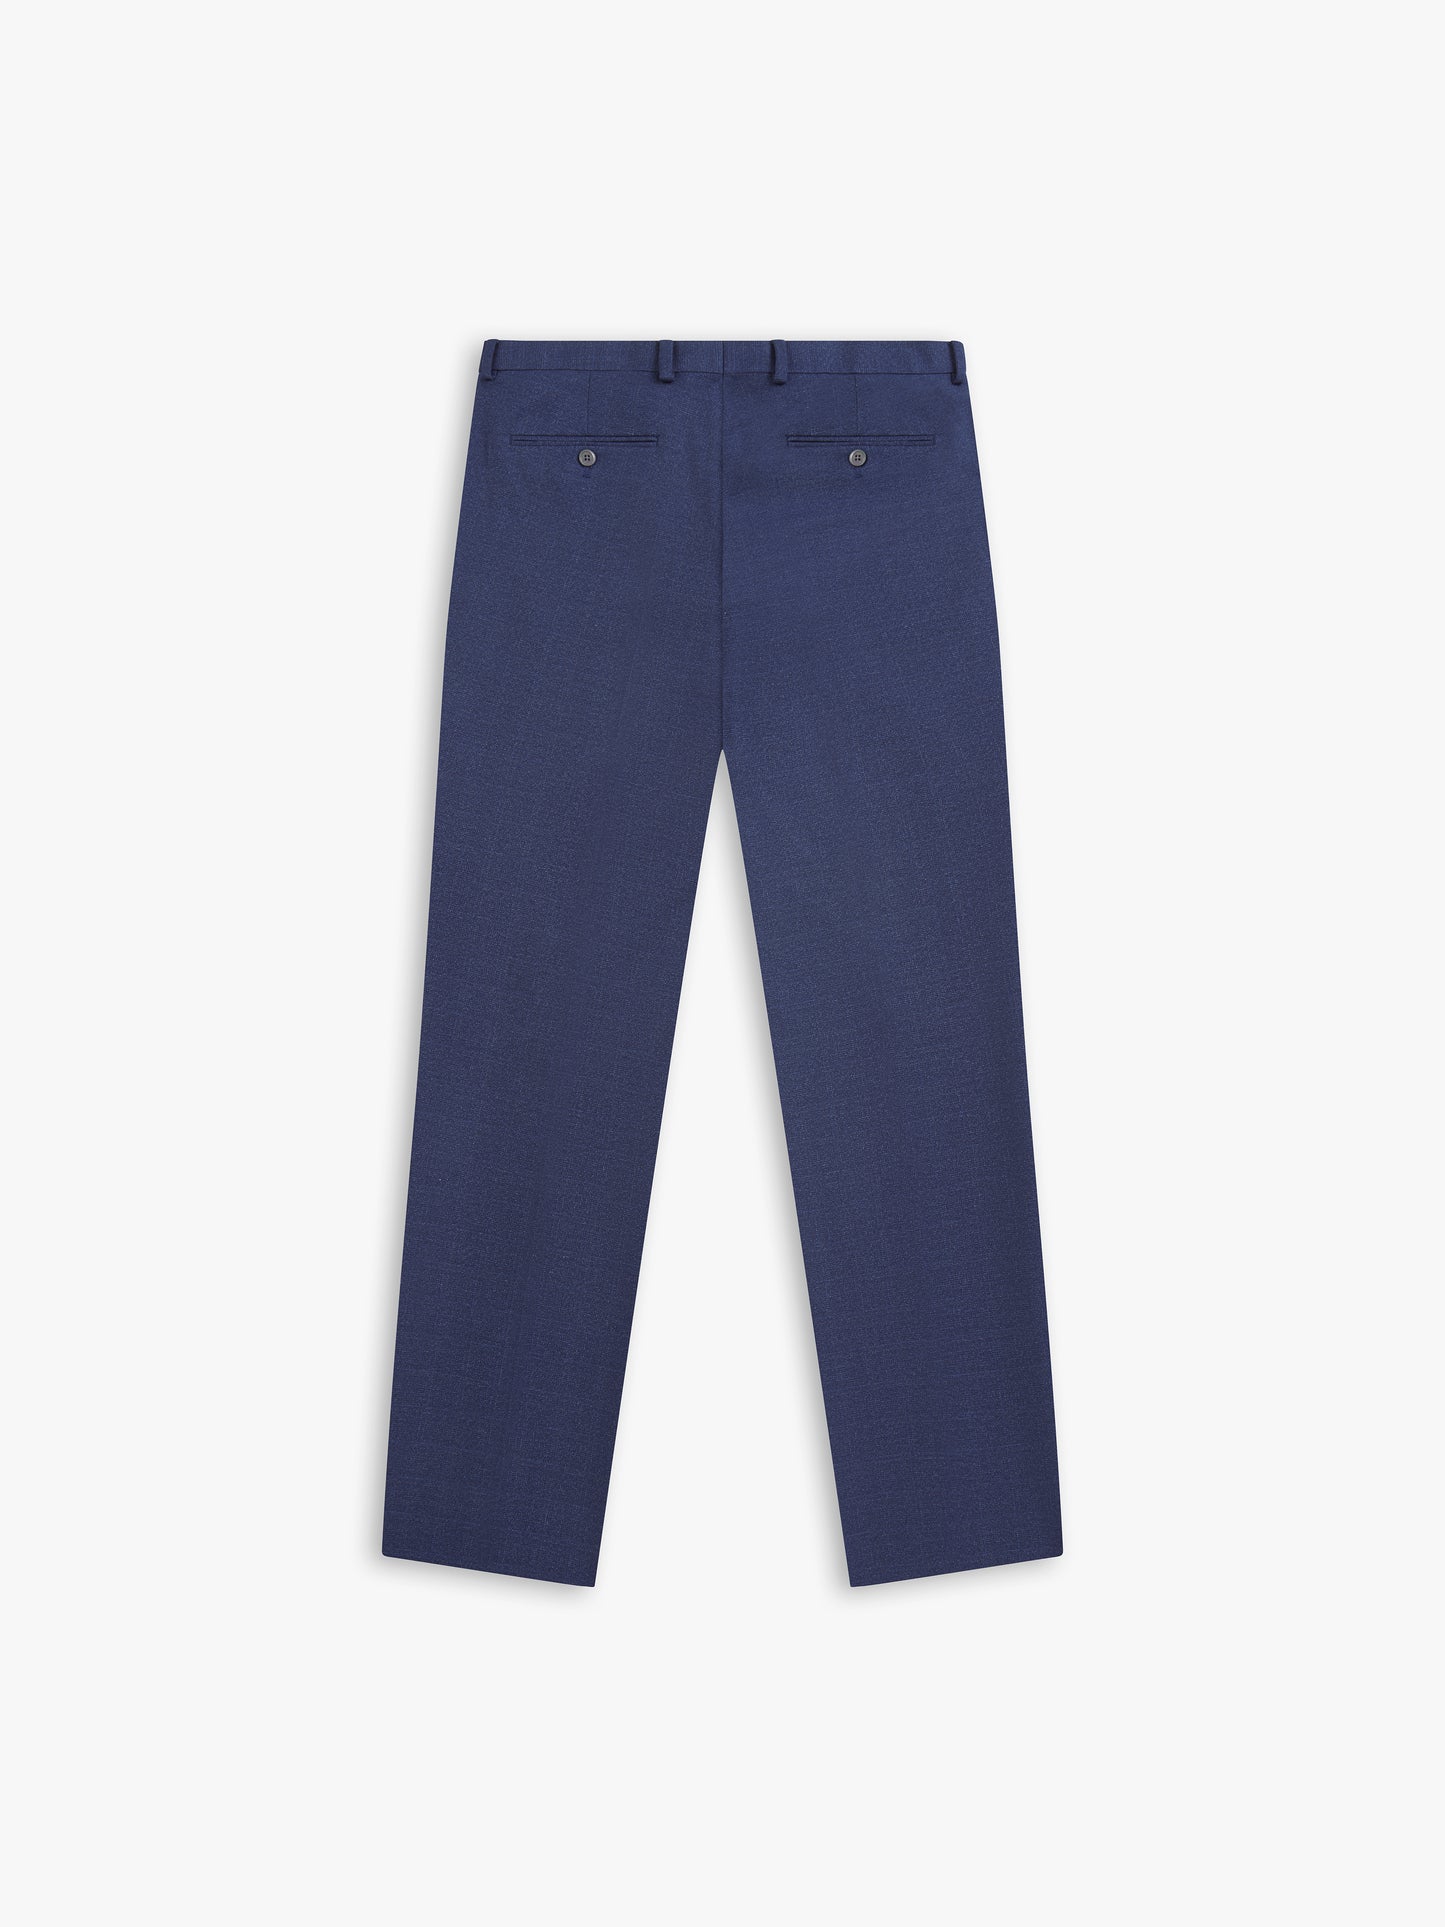 Oasis Navy Blue Semi Plain Trousers